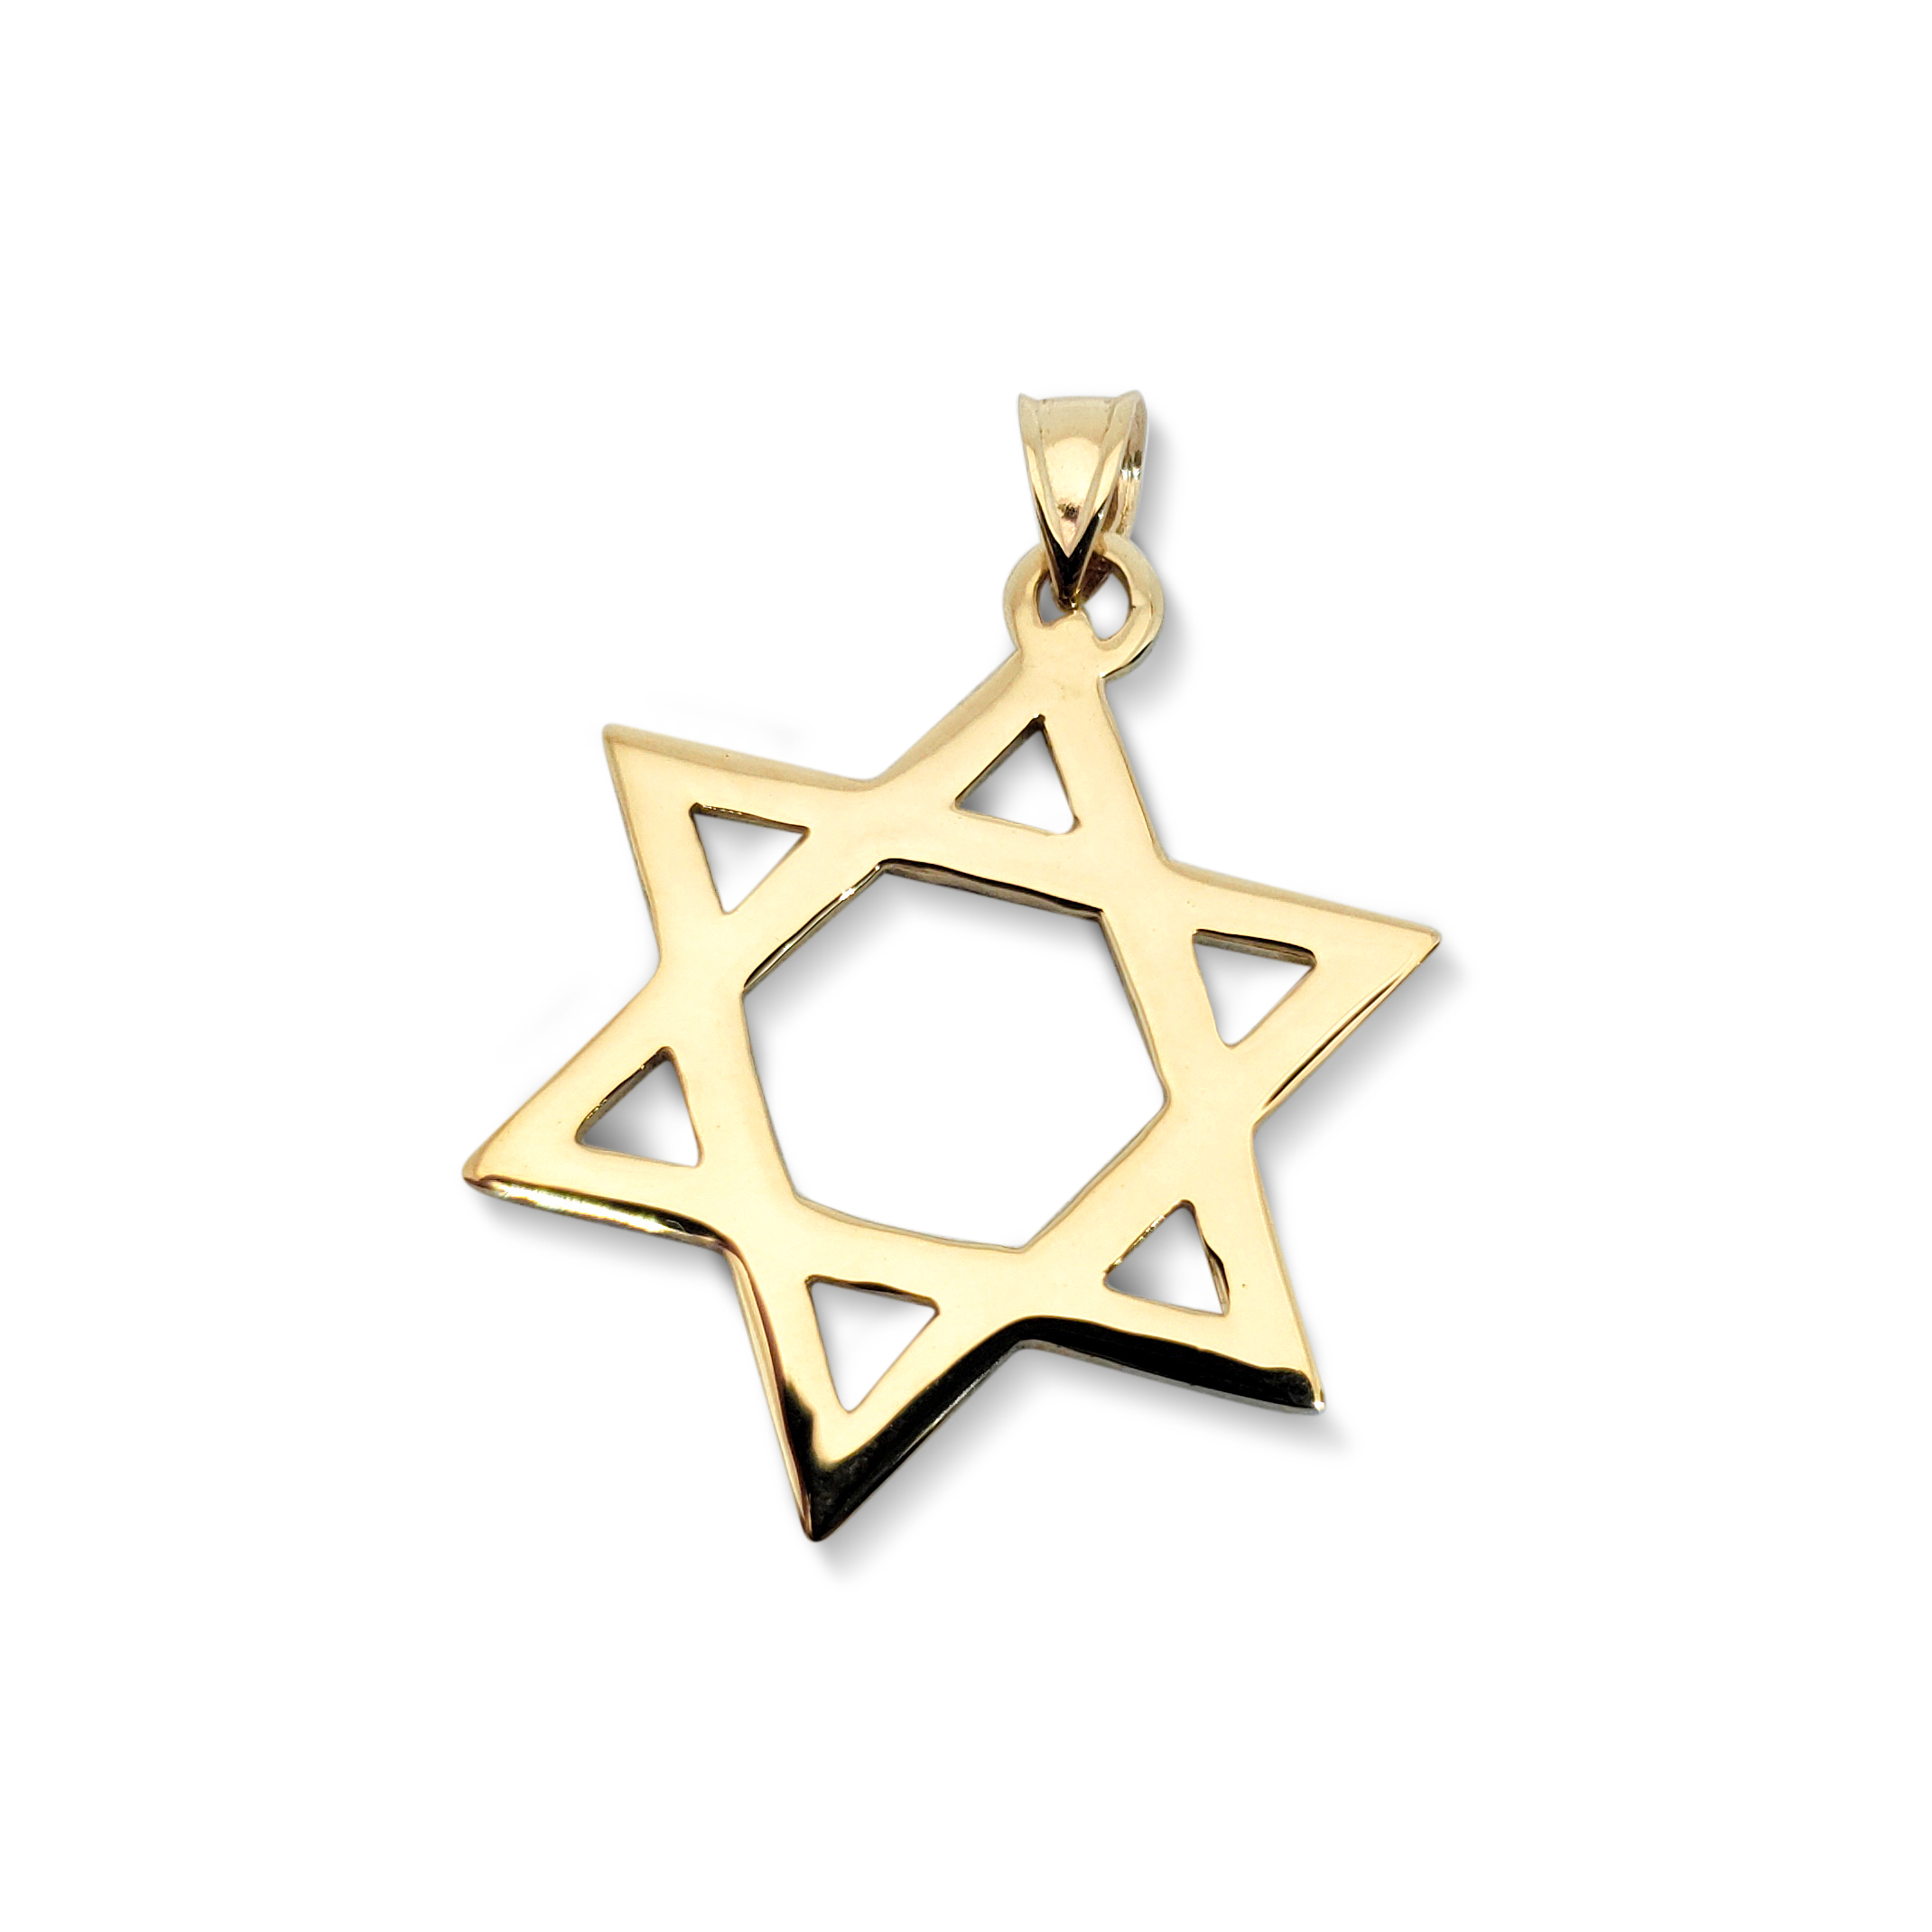 Handmade solid 18k Gold Star of David pendant 3.7 Grams | Jahda